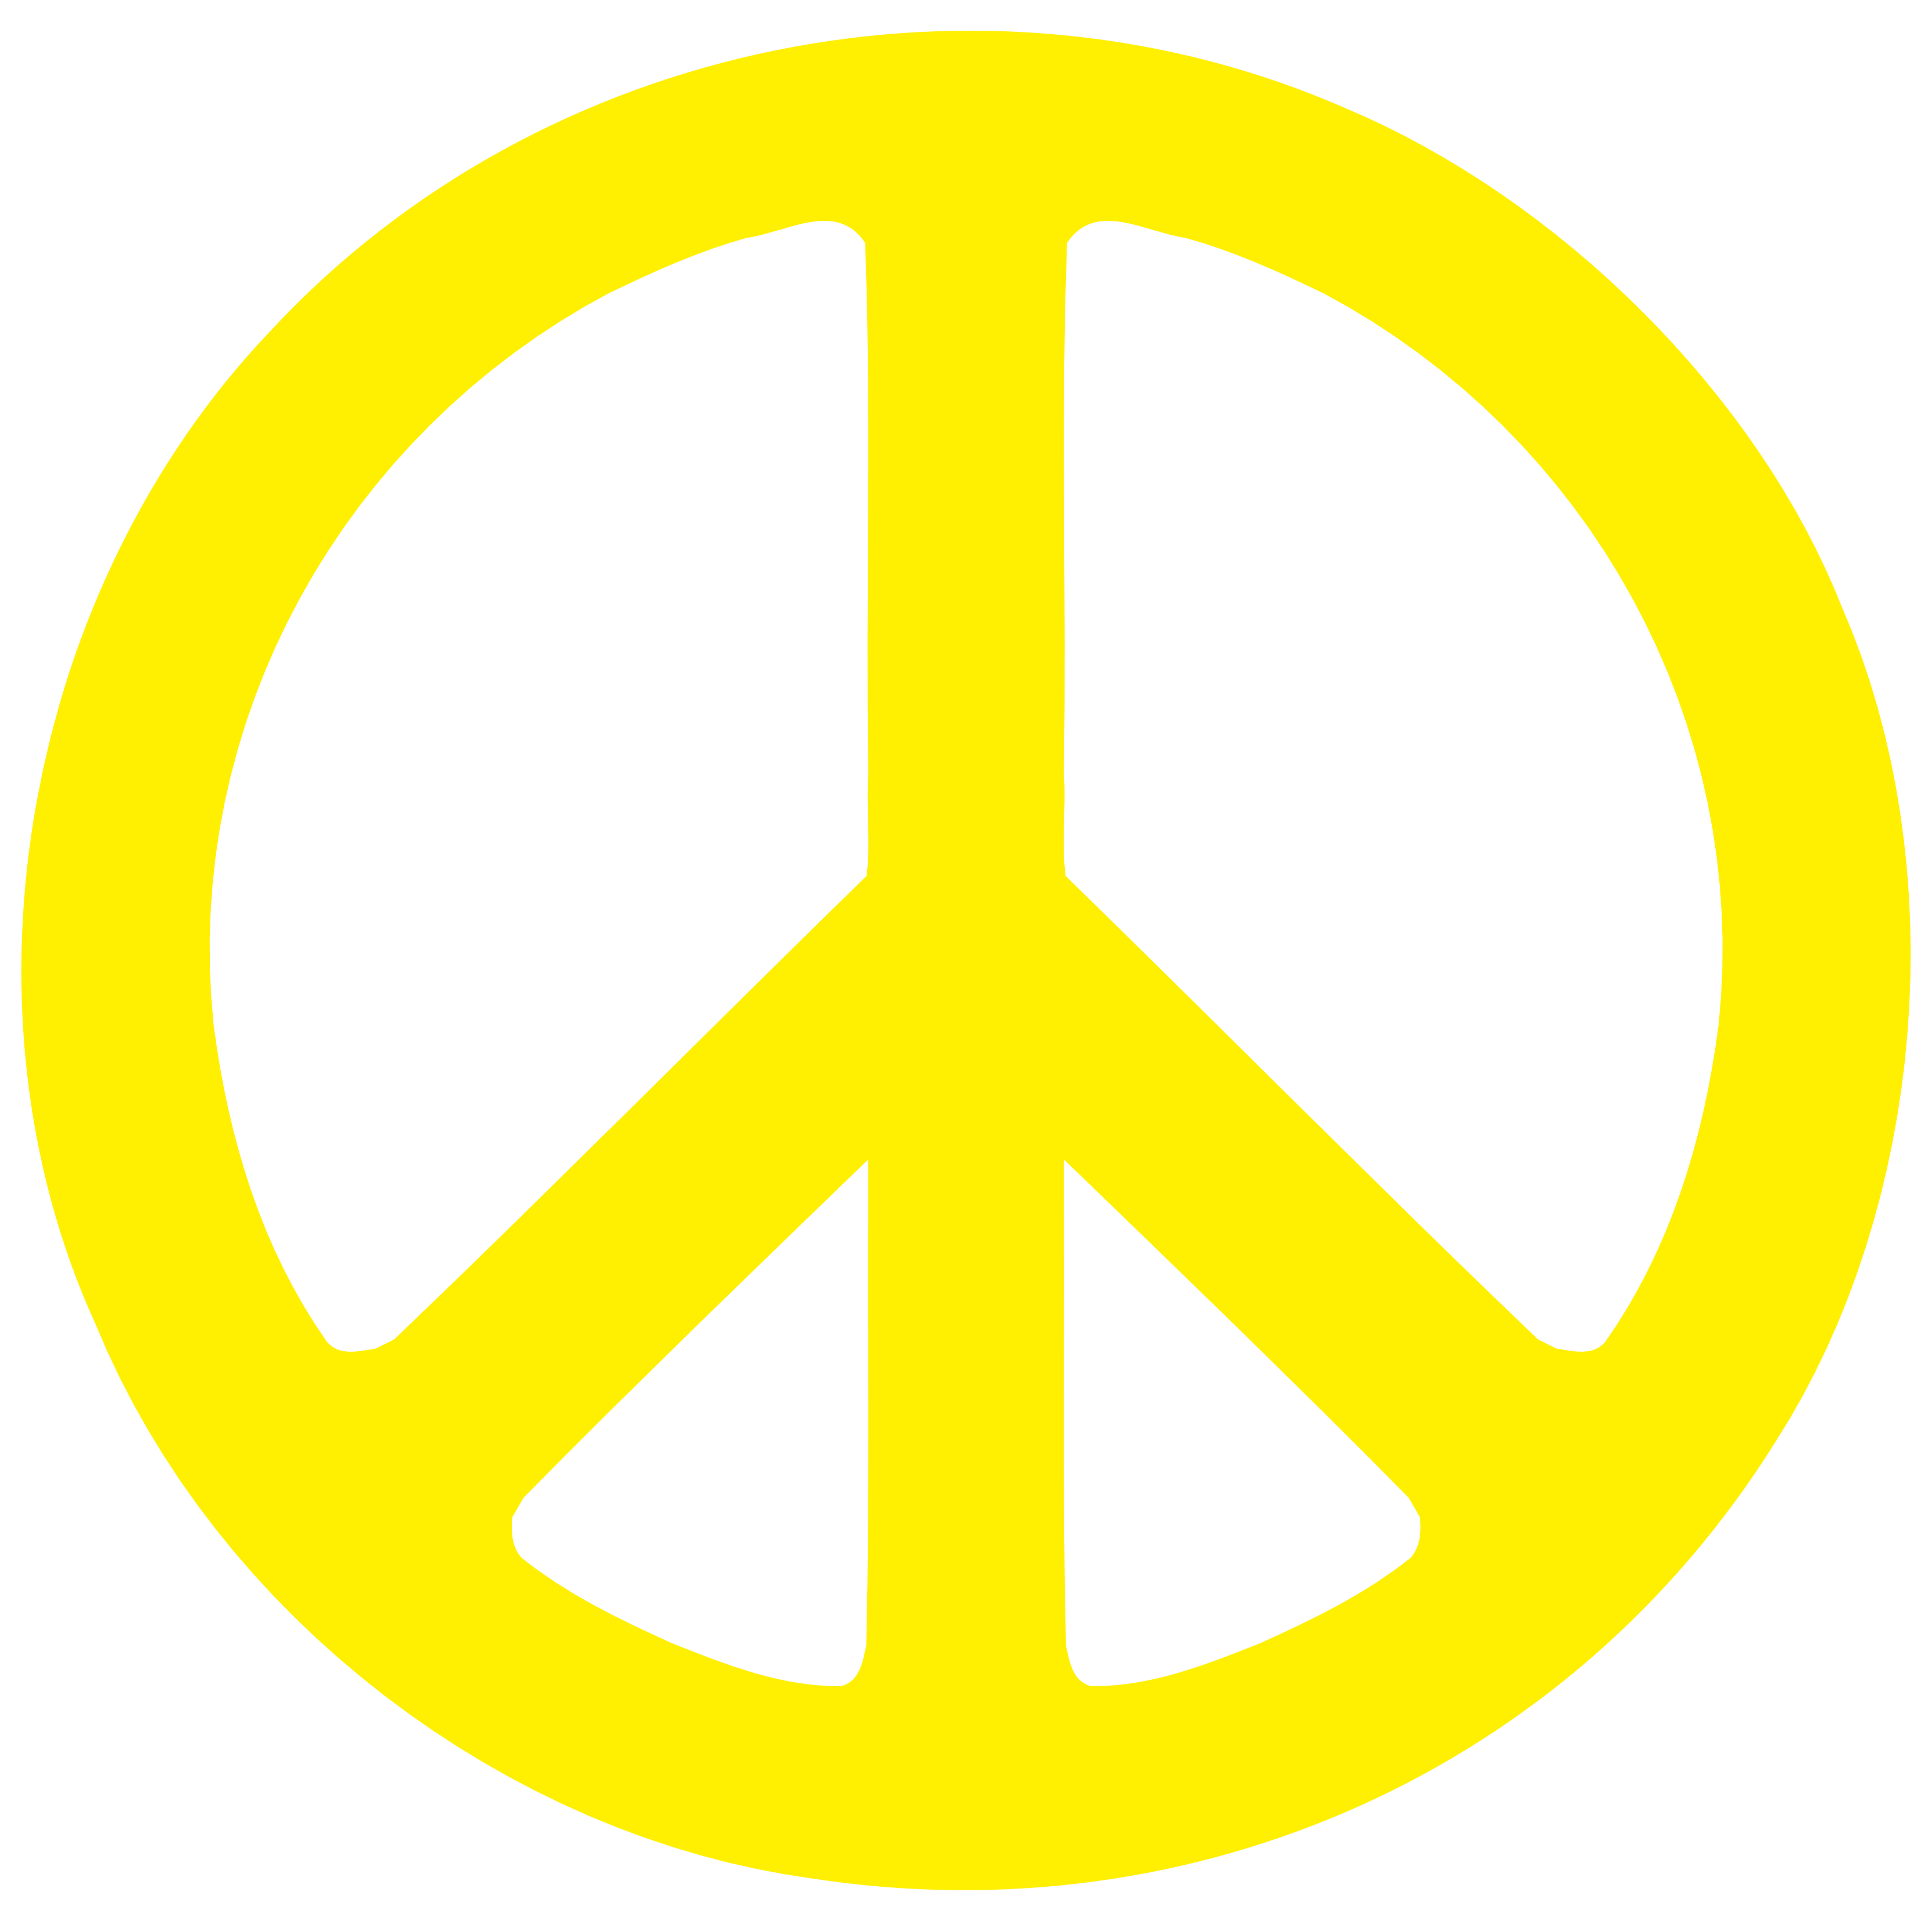 Electric Yellow Peace Symbol 1 dweeb peacesymbol.org Peace Symbol ...